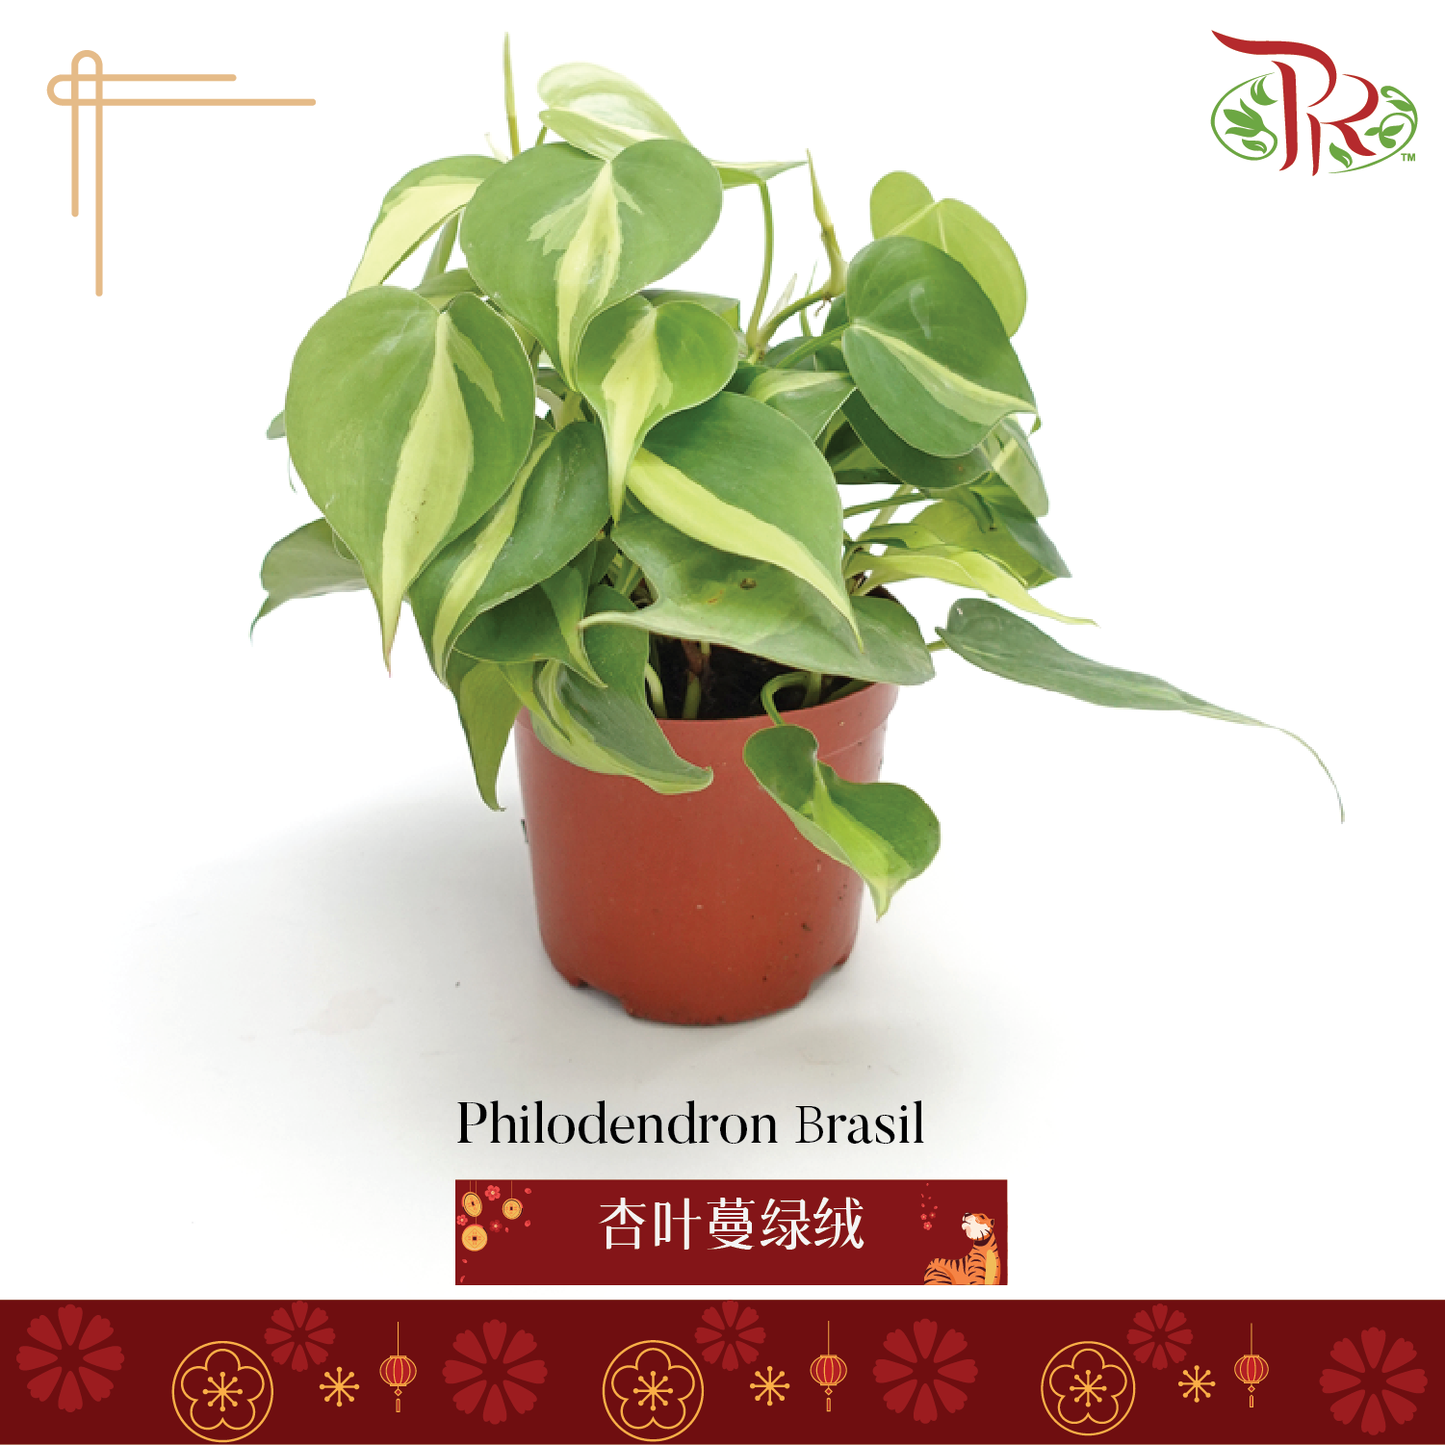 Philodendron Brasil《杏叶蔓绿绒》 - Pudu Ria Florist